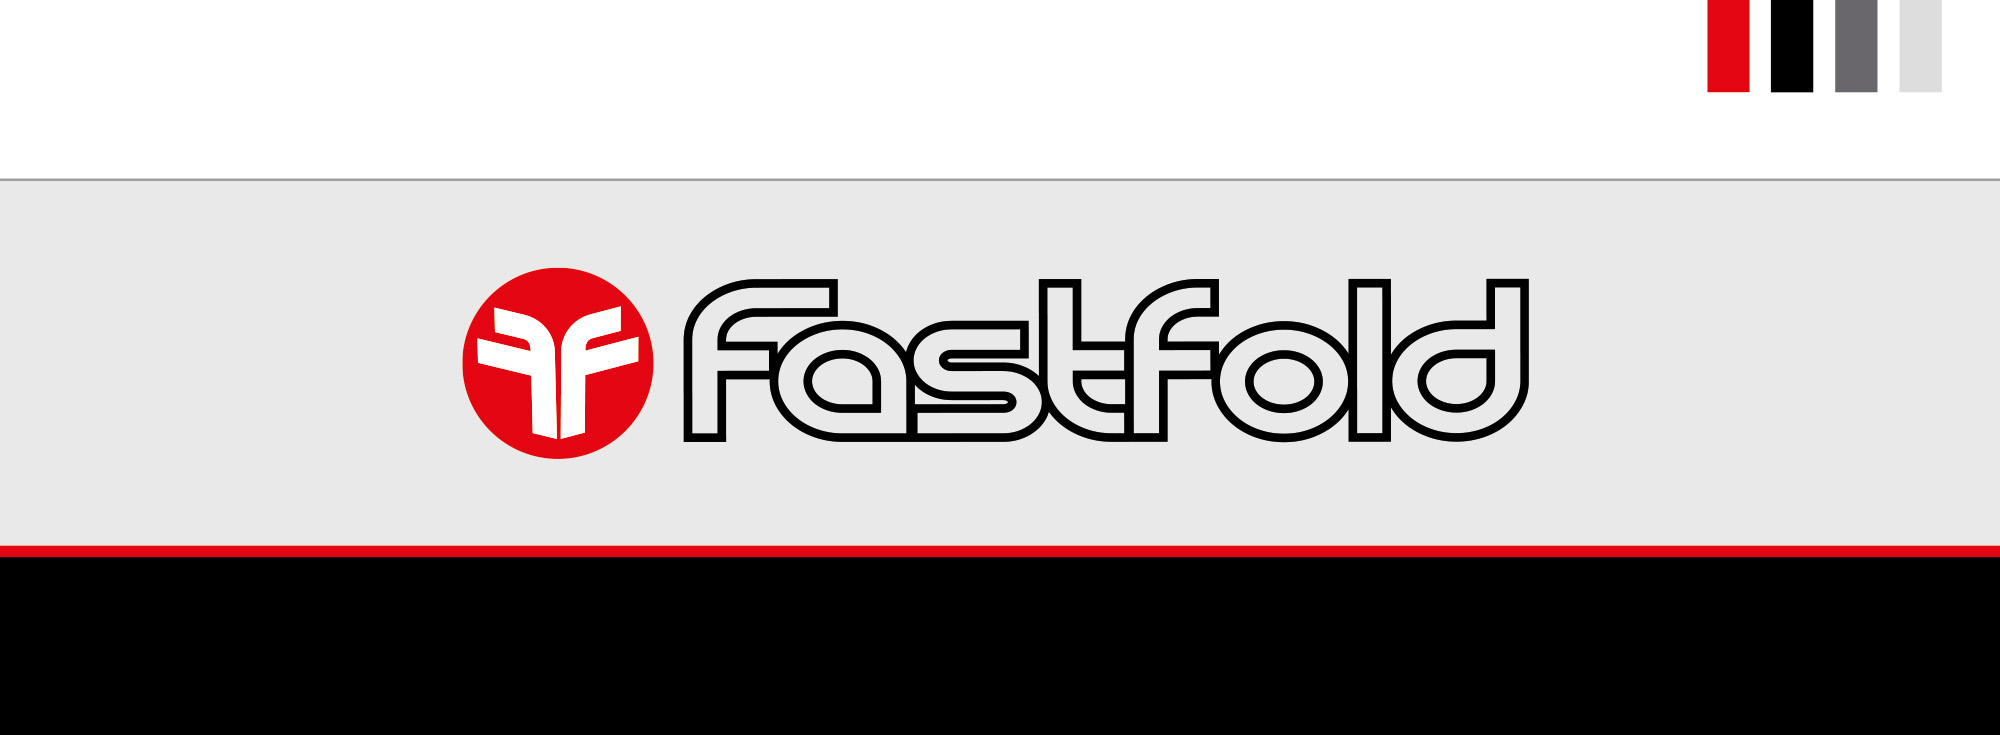 fastfold